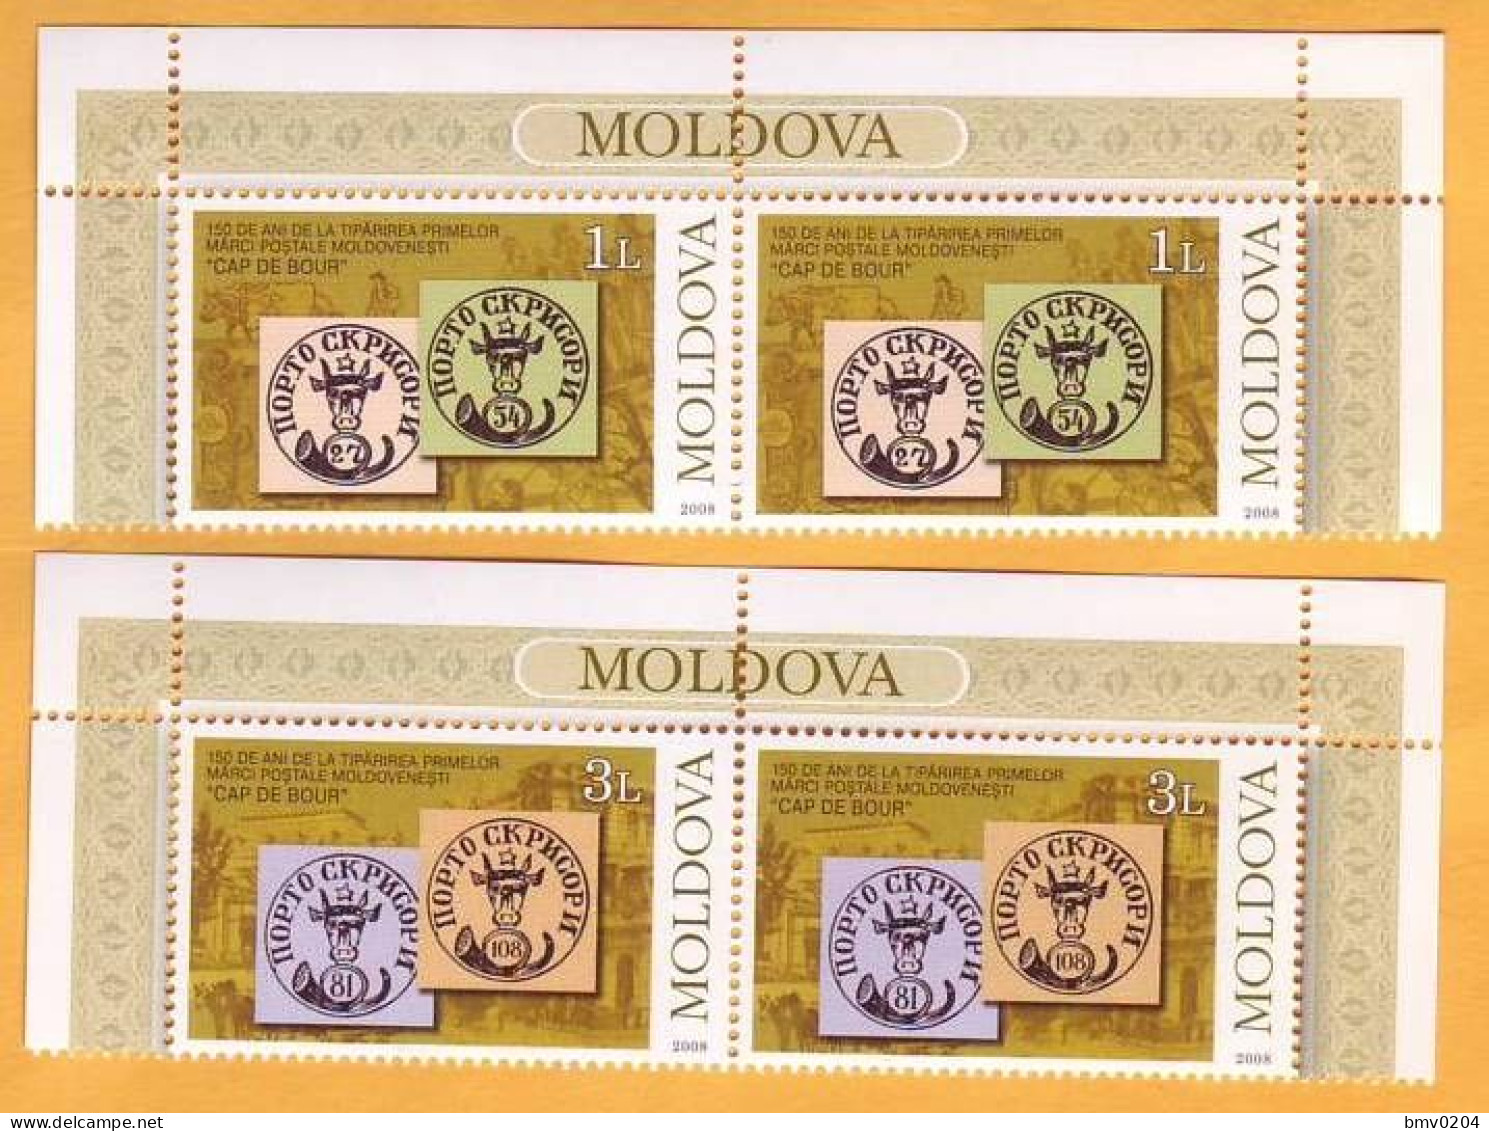 2008 Moldova Moldavie 150. Edition Of The First Postage Stamps Of The Moldavian Principality "Cap De Bour" 2x2v Mint. - Moldavia